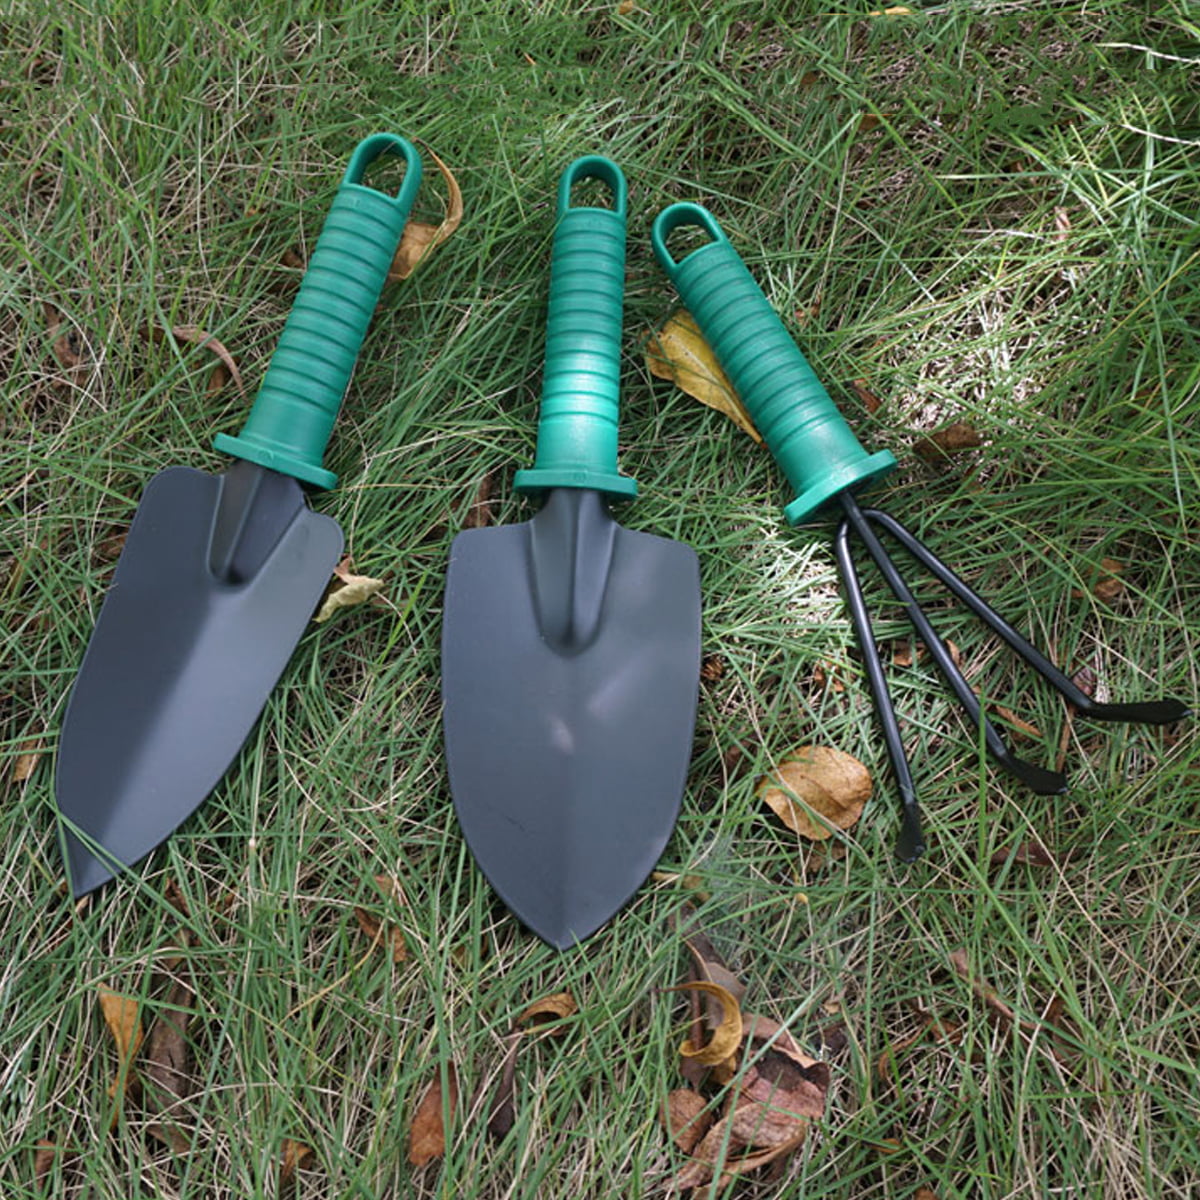 Round Garden/ Trowel Hand/ Shovel Stainless Steel Shovel for Planting Transplanting Weeding Moving